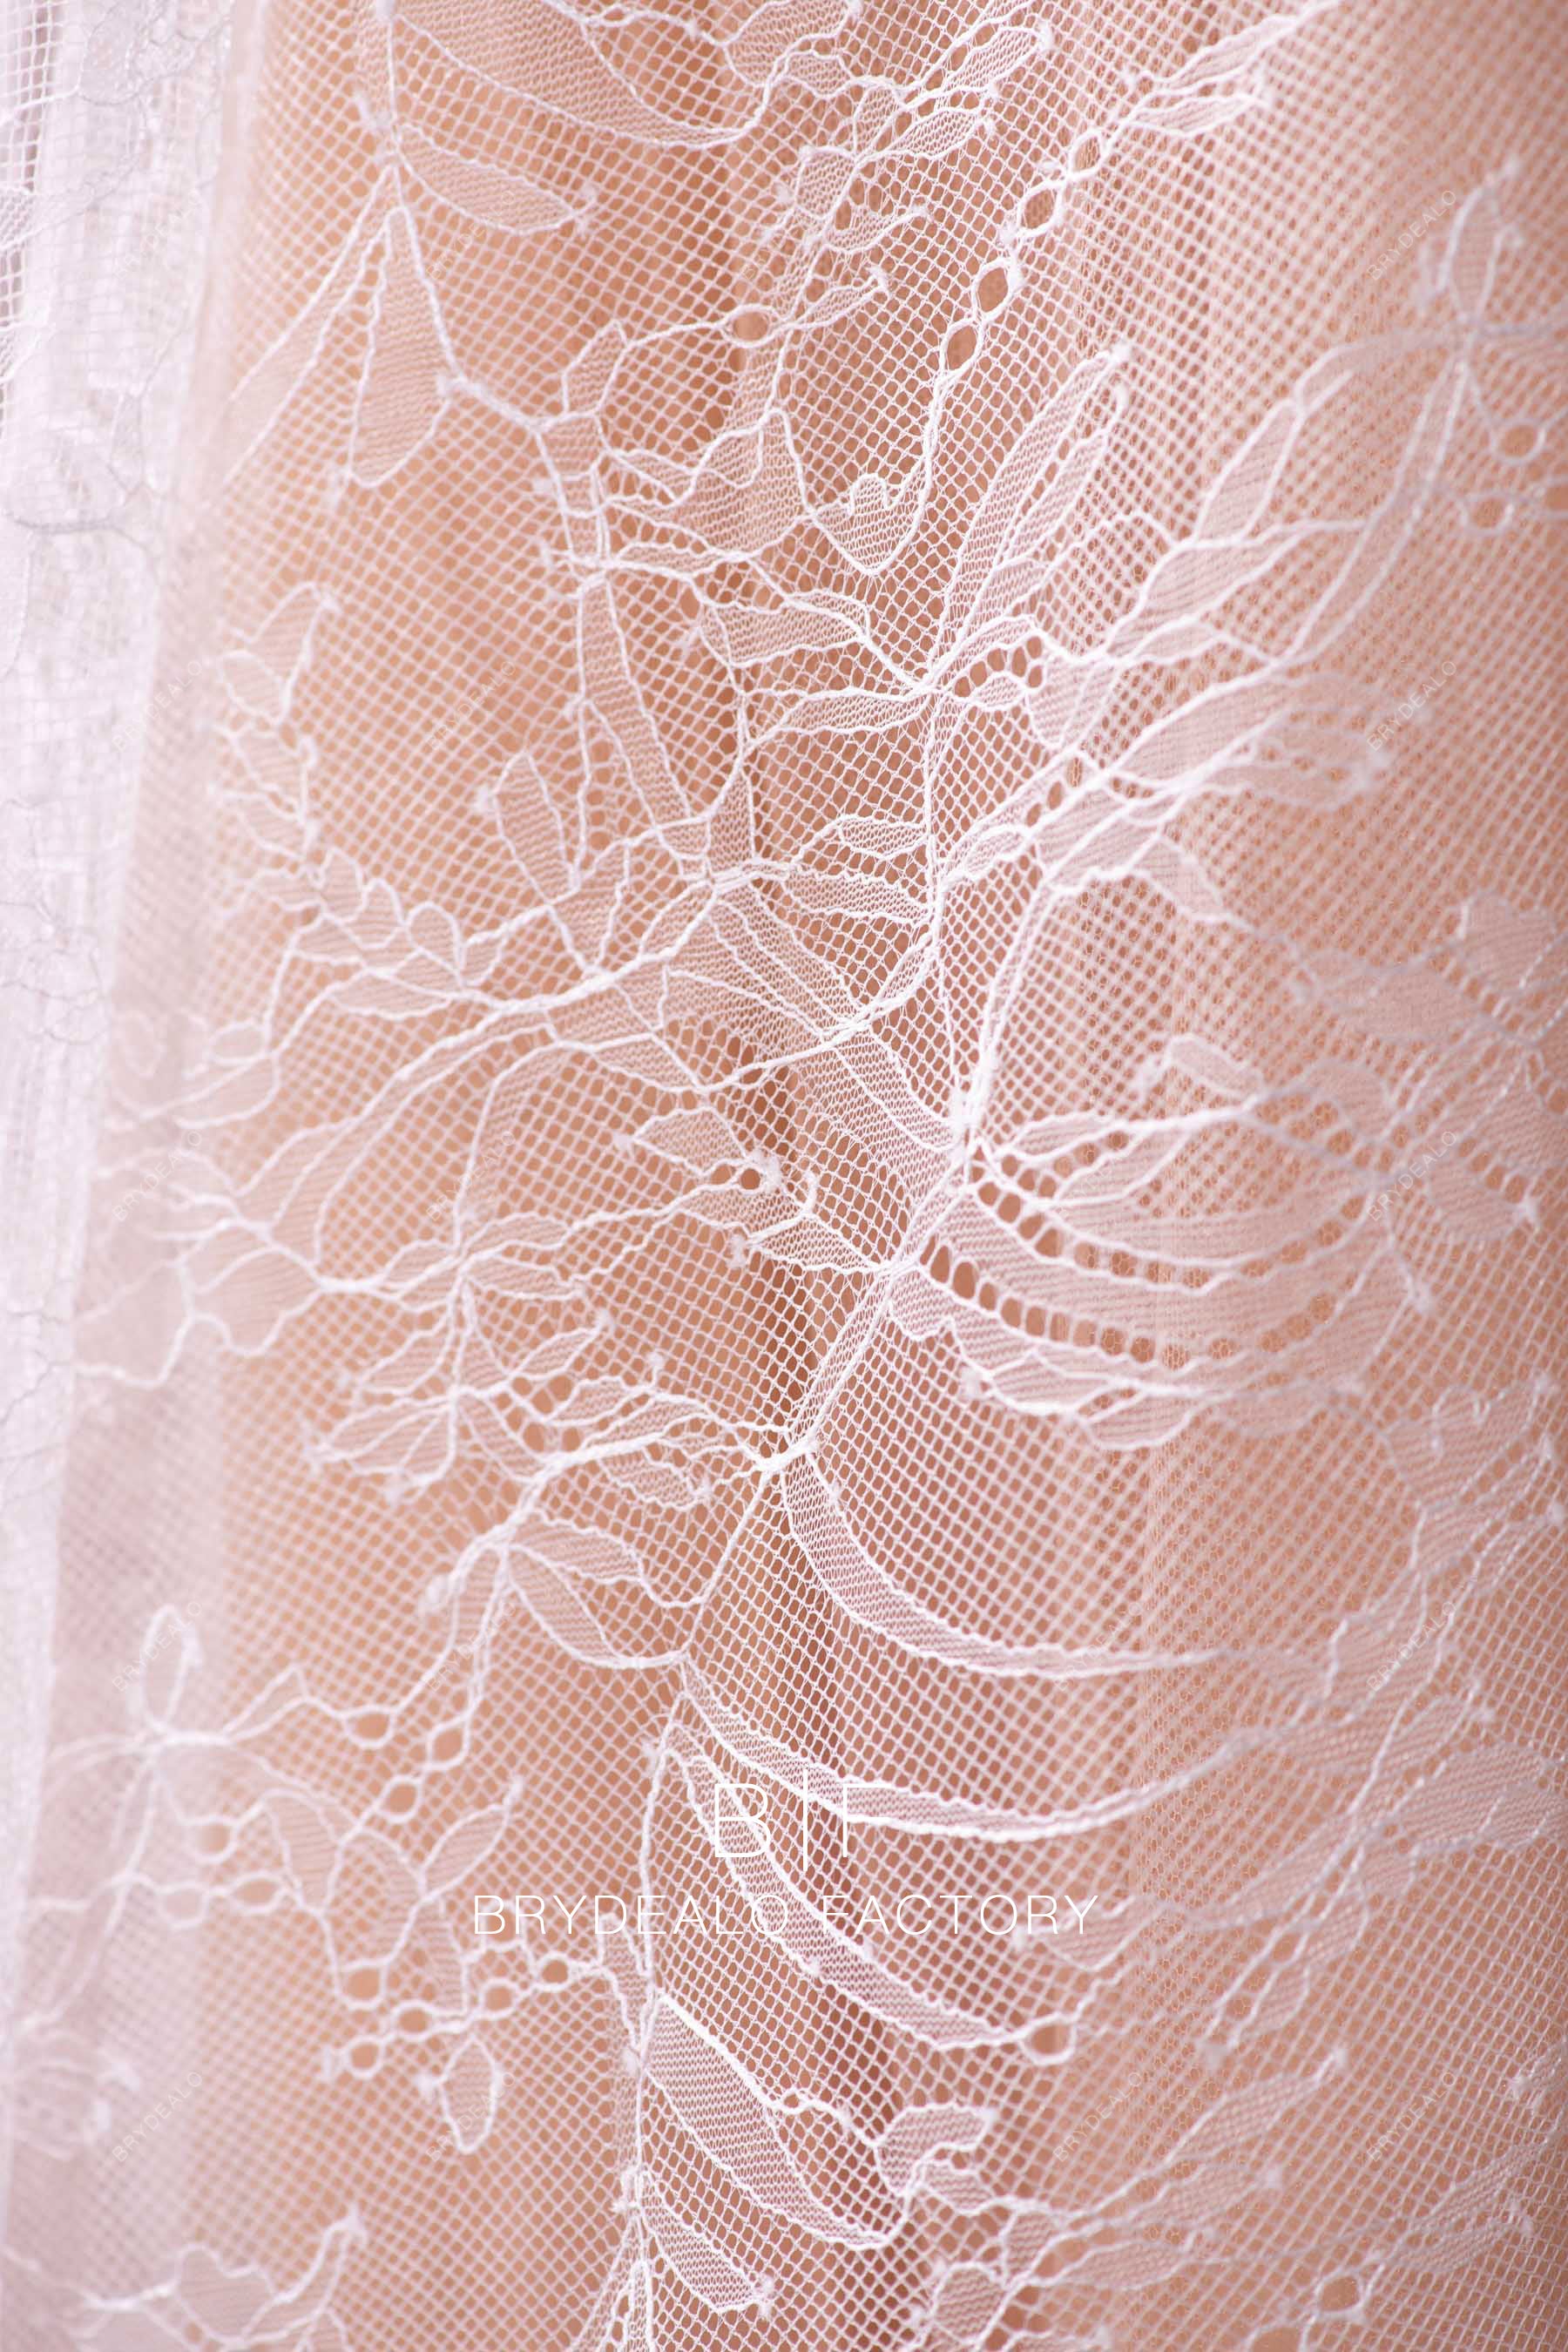 tiny leaf pattern lace fabric